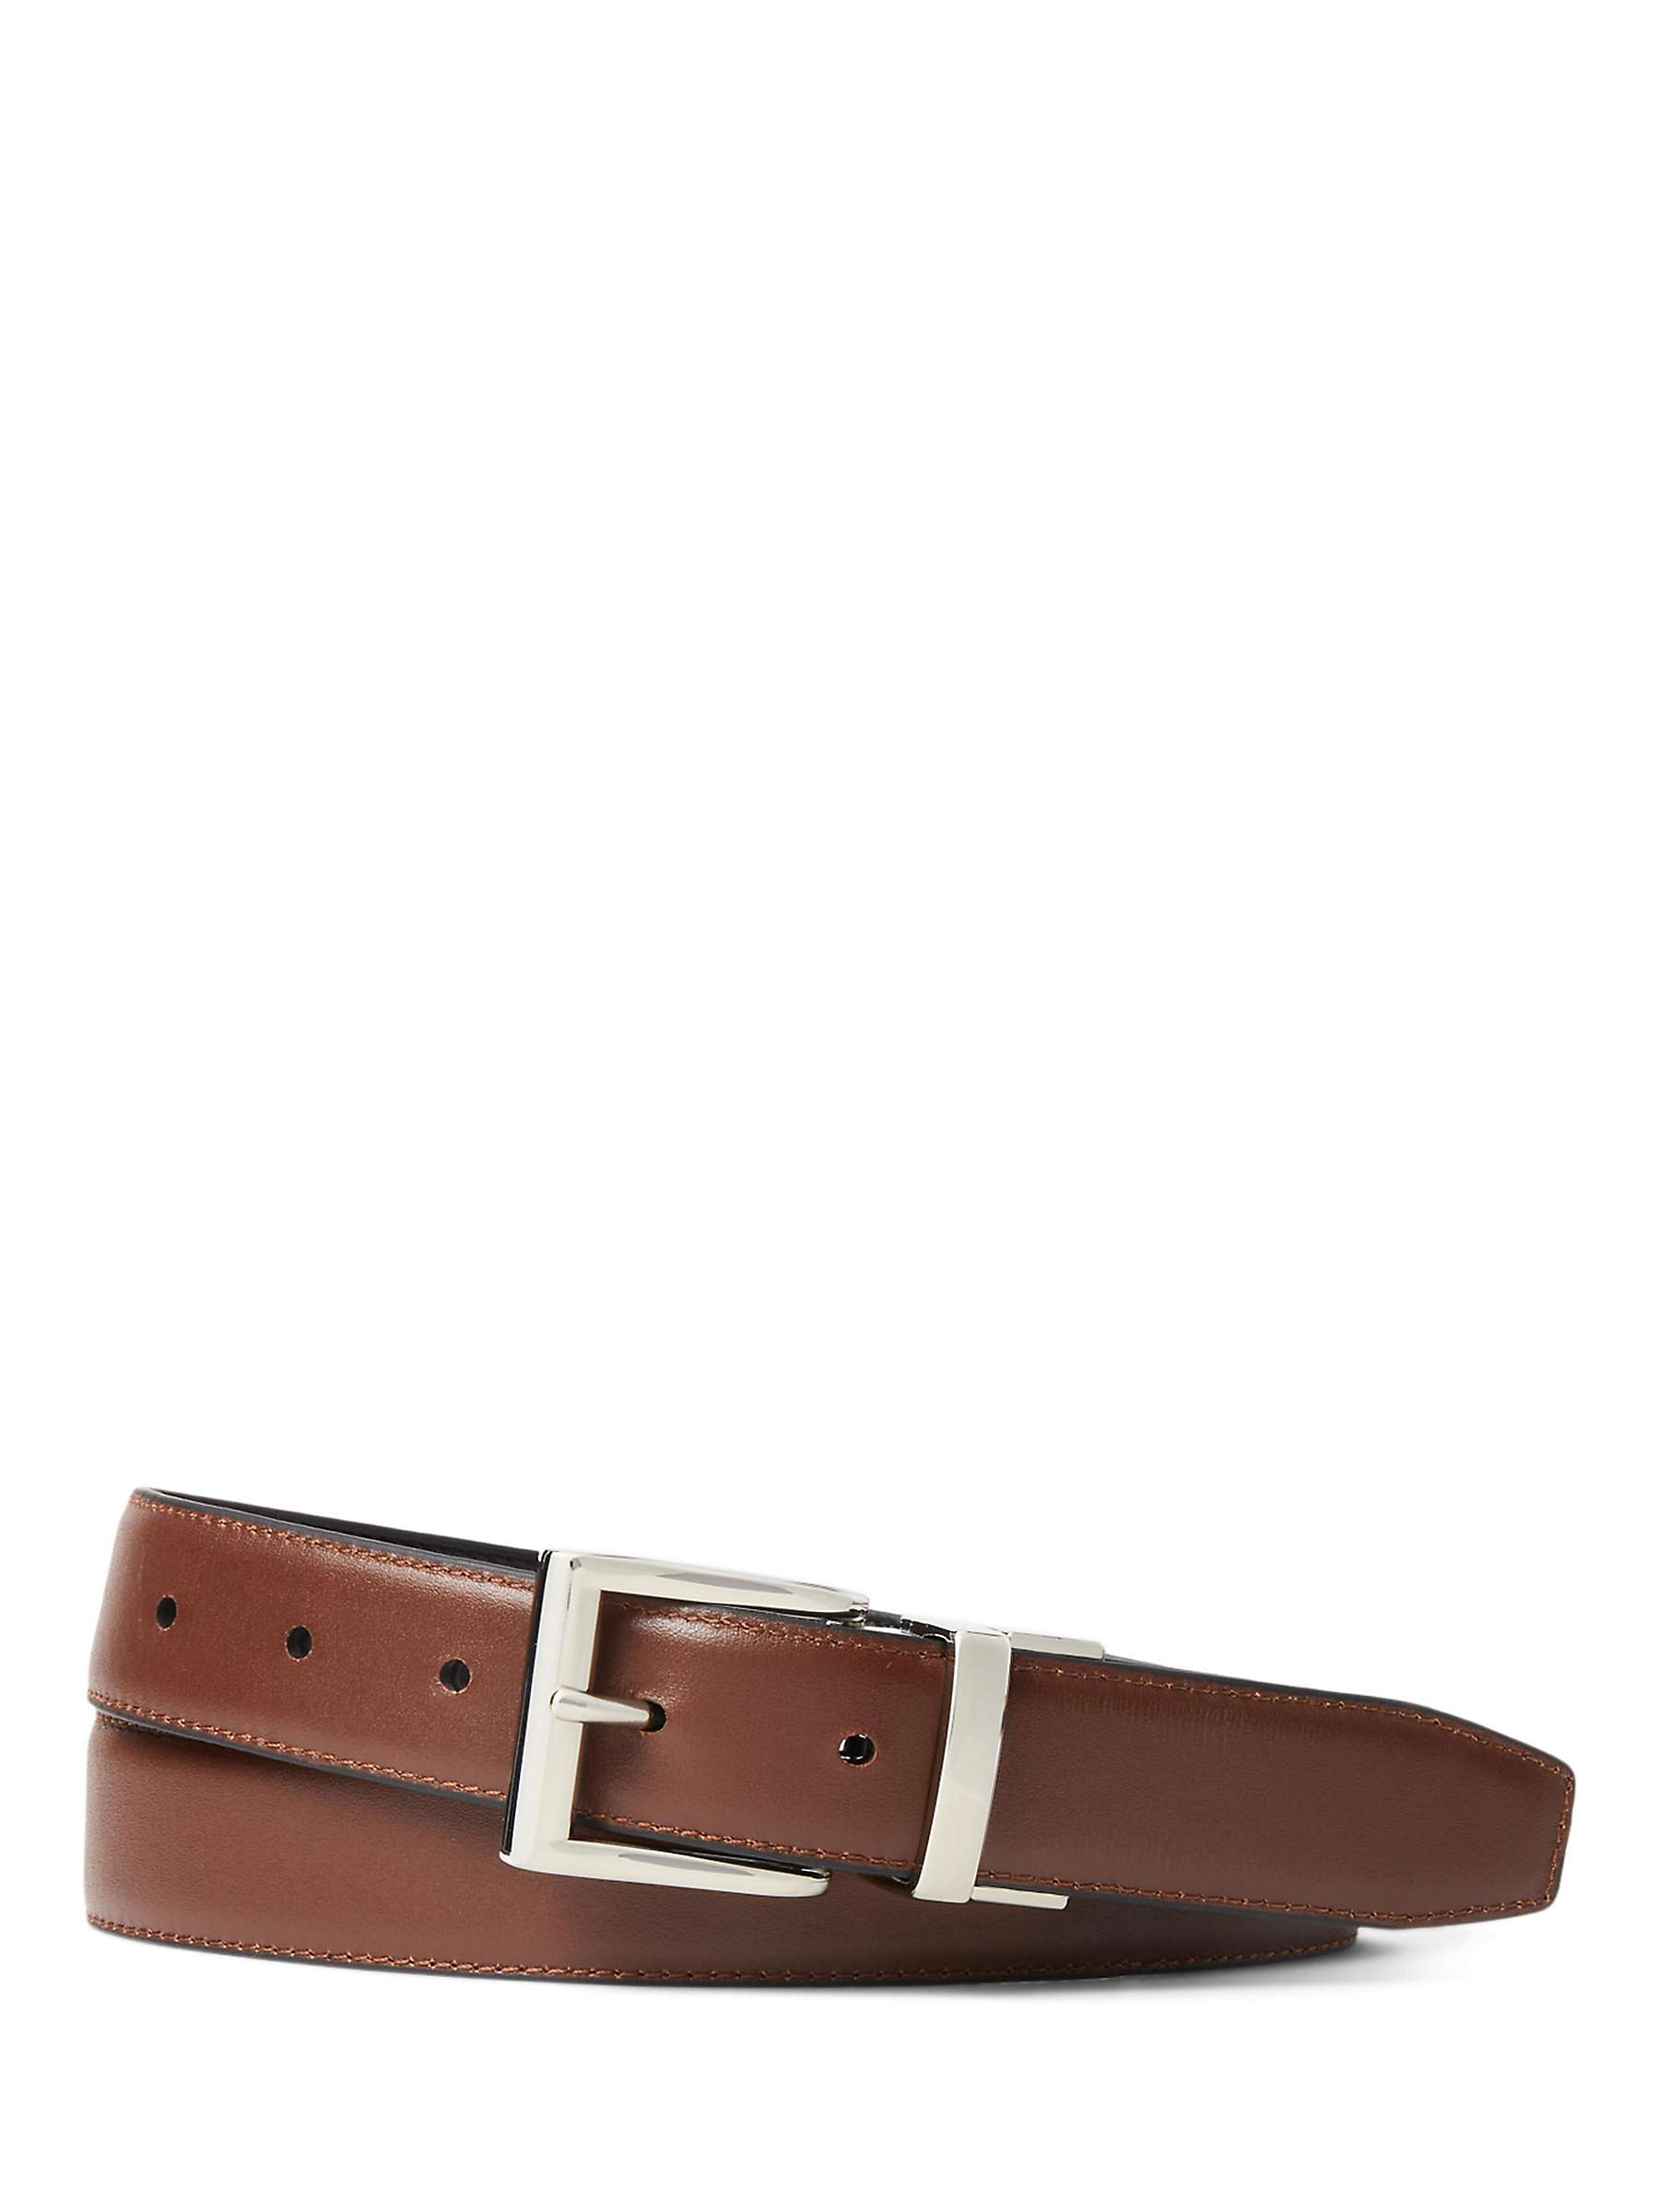 Buy Polo Ralph Lauren Leather Reversible Belt, Black/Brown Online at johnlewis.com